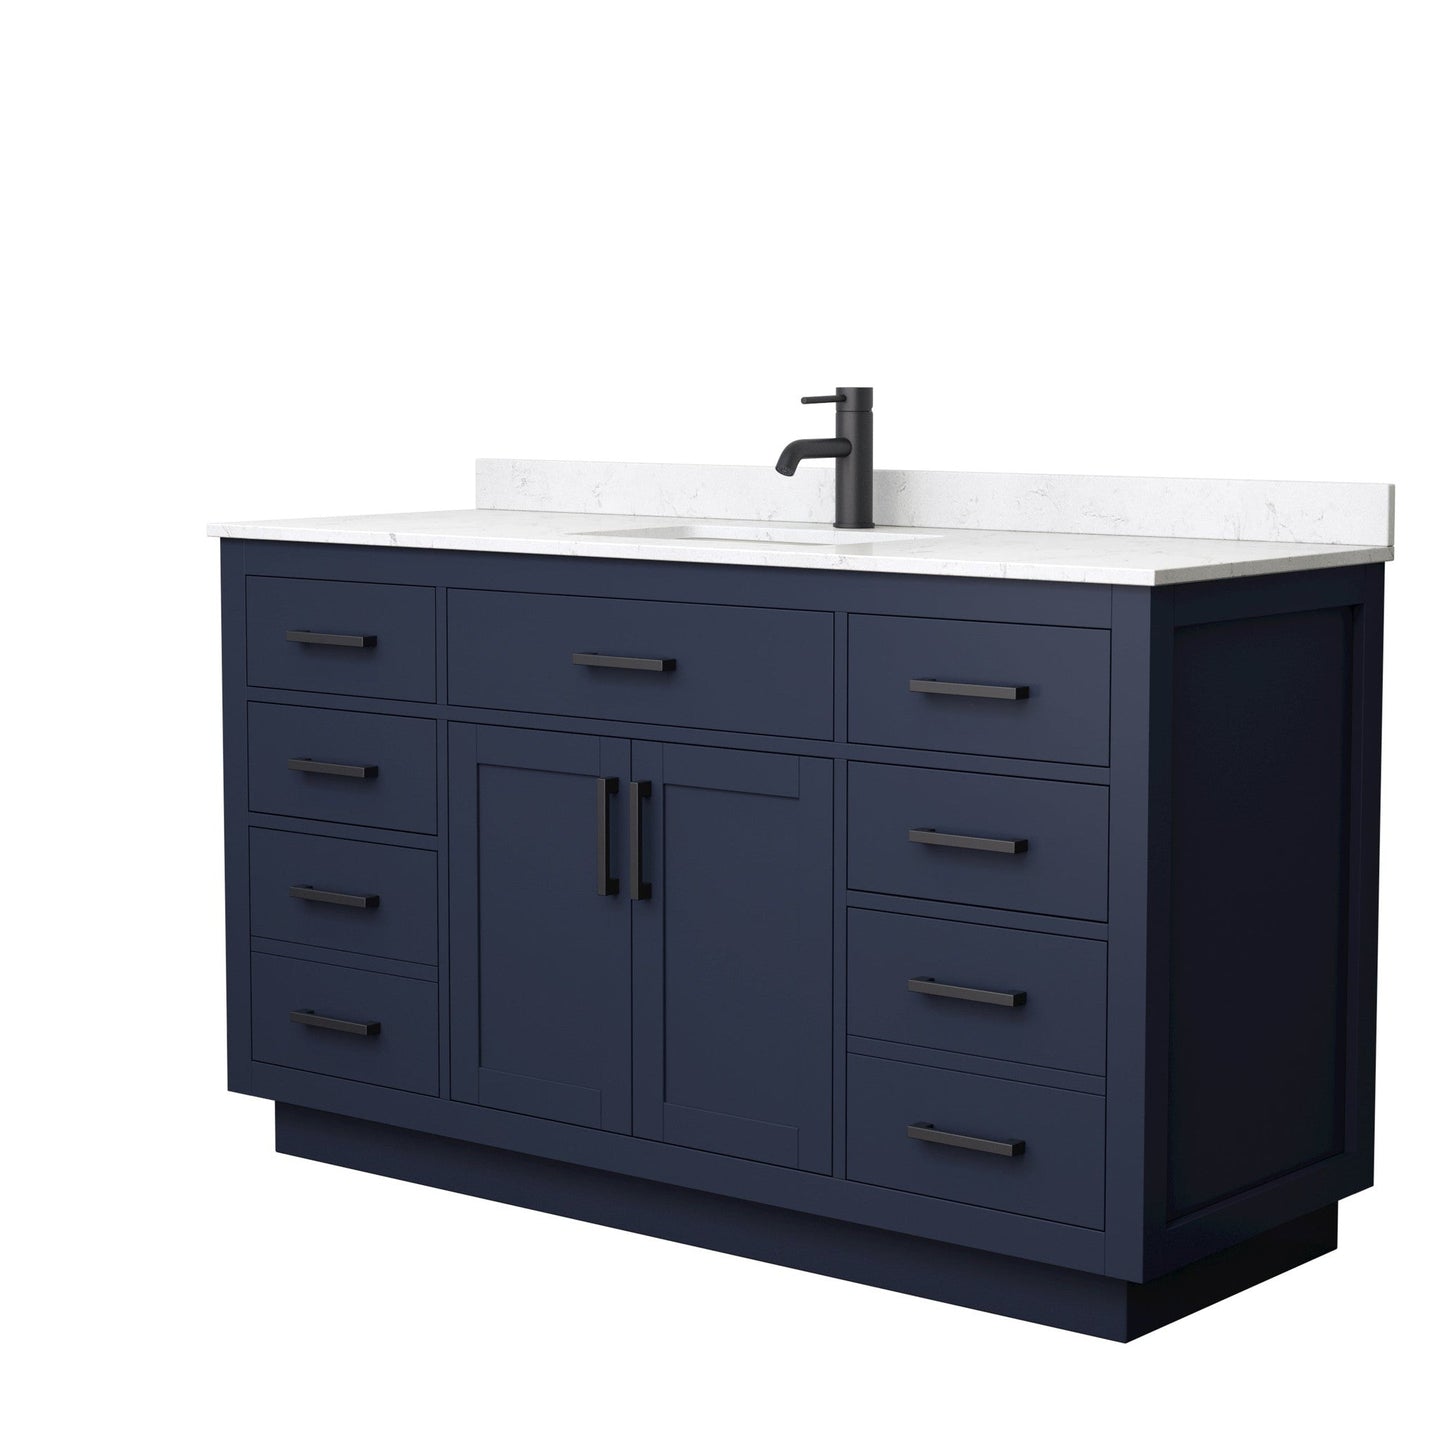 Beckett 60" Single Bathroom Vanity With Toe Kick in Dark Blue, Carrara Cultured Marble Countertop, Undermount Square Sink, Matte Black Trim